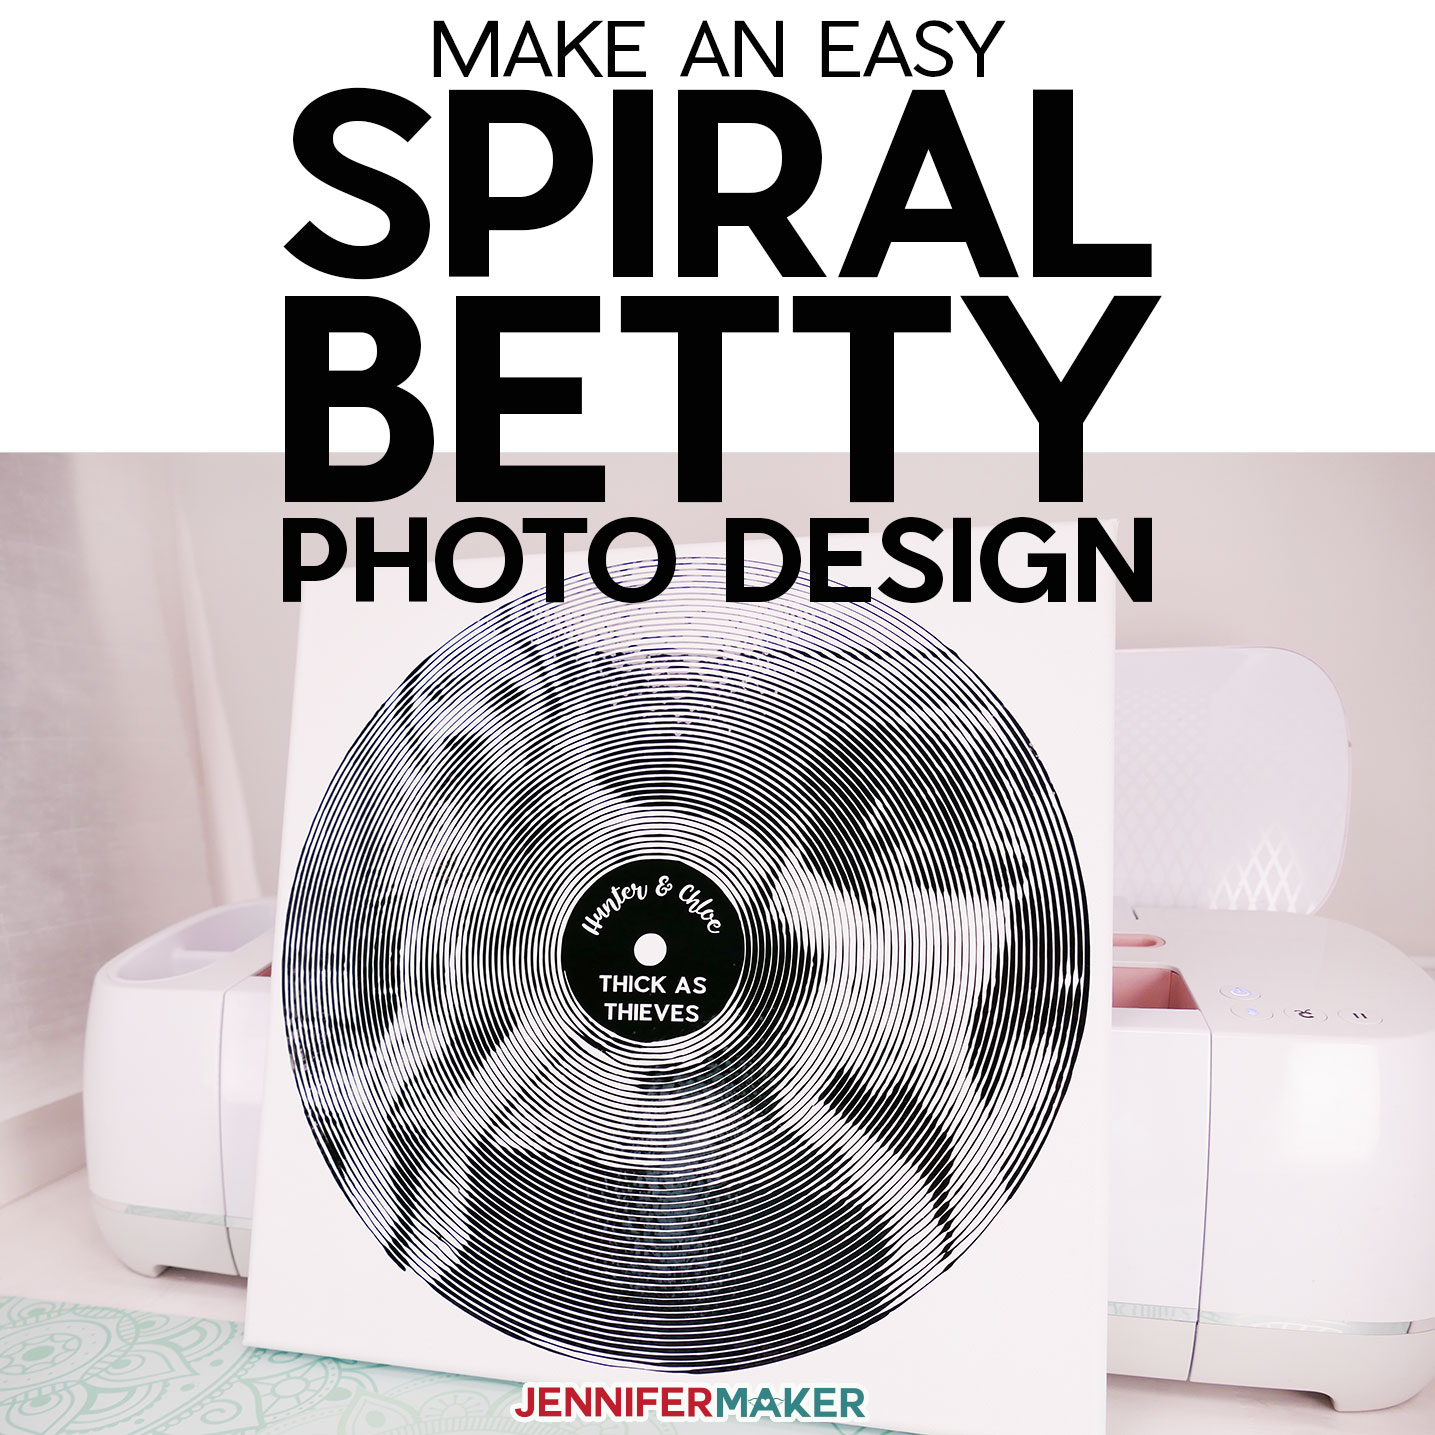 Easy Spiral Betty Photo Design Tutorial with center design and ideas for usage! #cricut #vinyl #photos